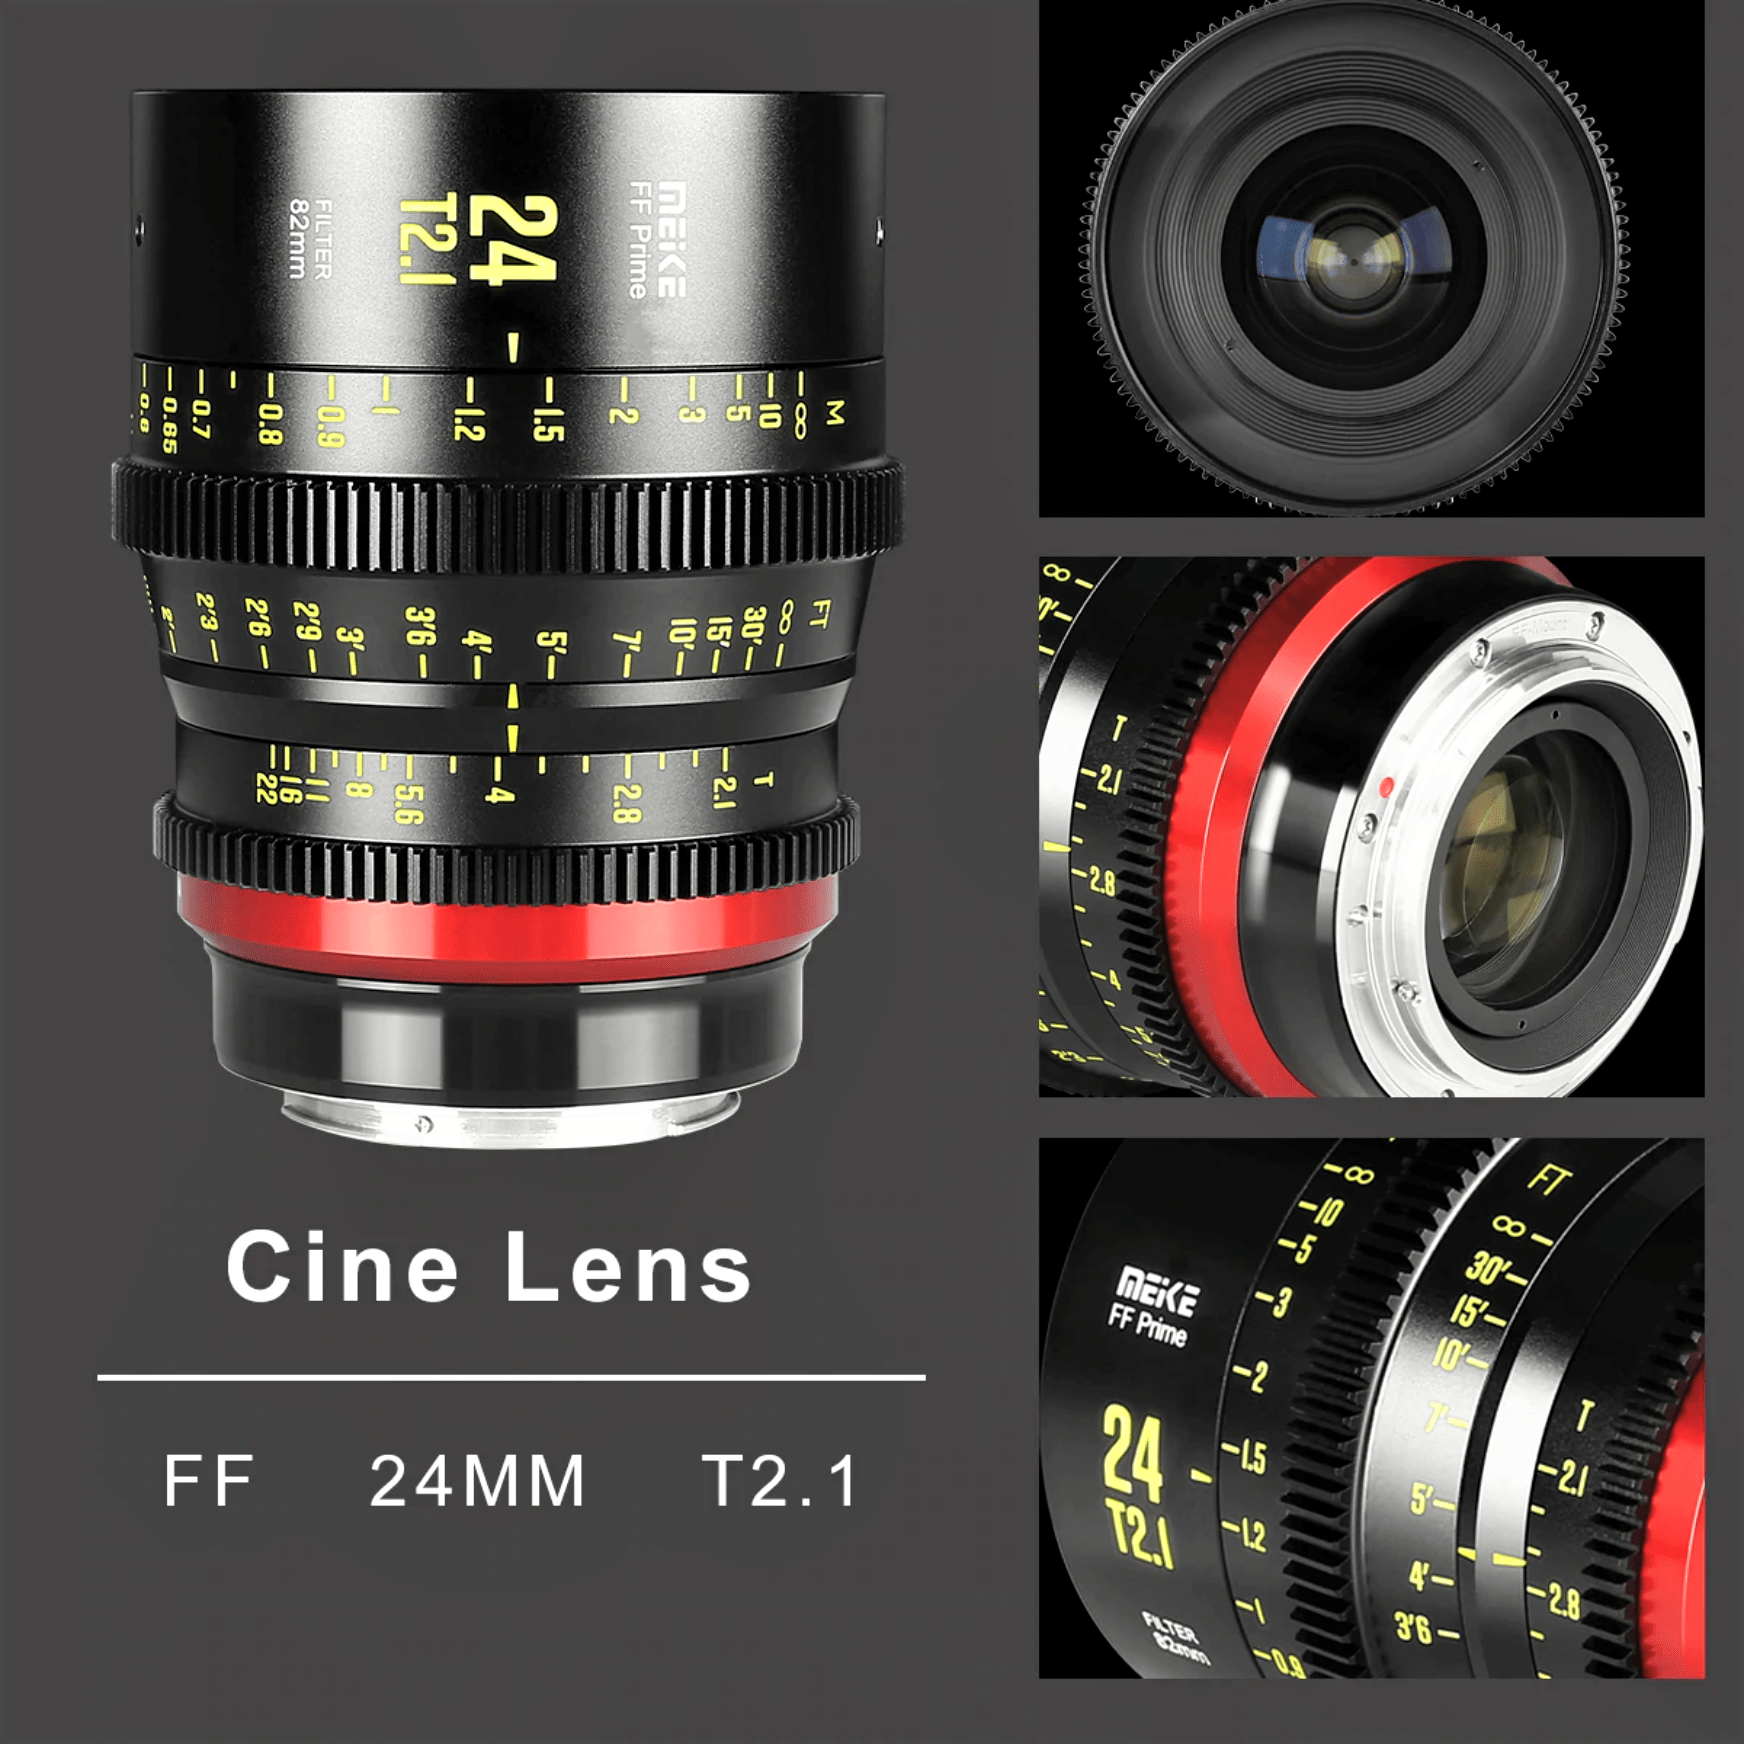 Meike Cinema Full Frame Cinema Prime 24mm T2.1 Lens (Sony E Mount) in Different Perspectives